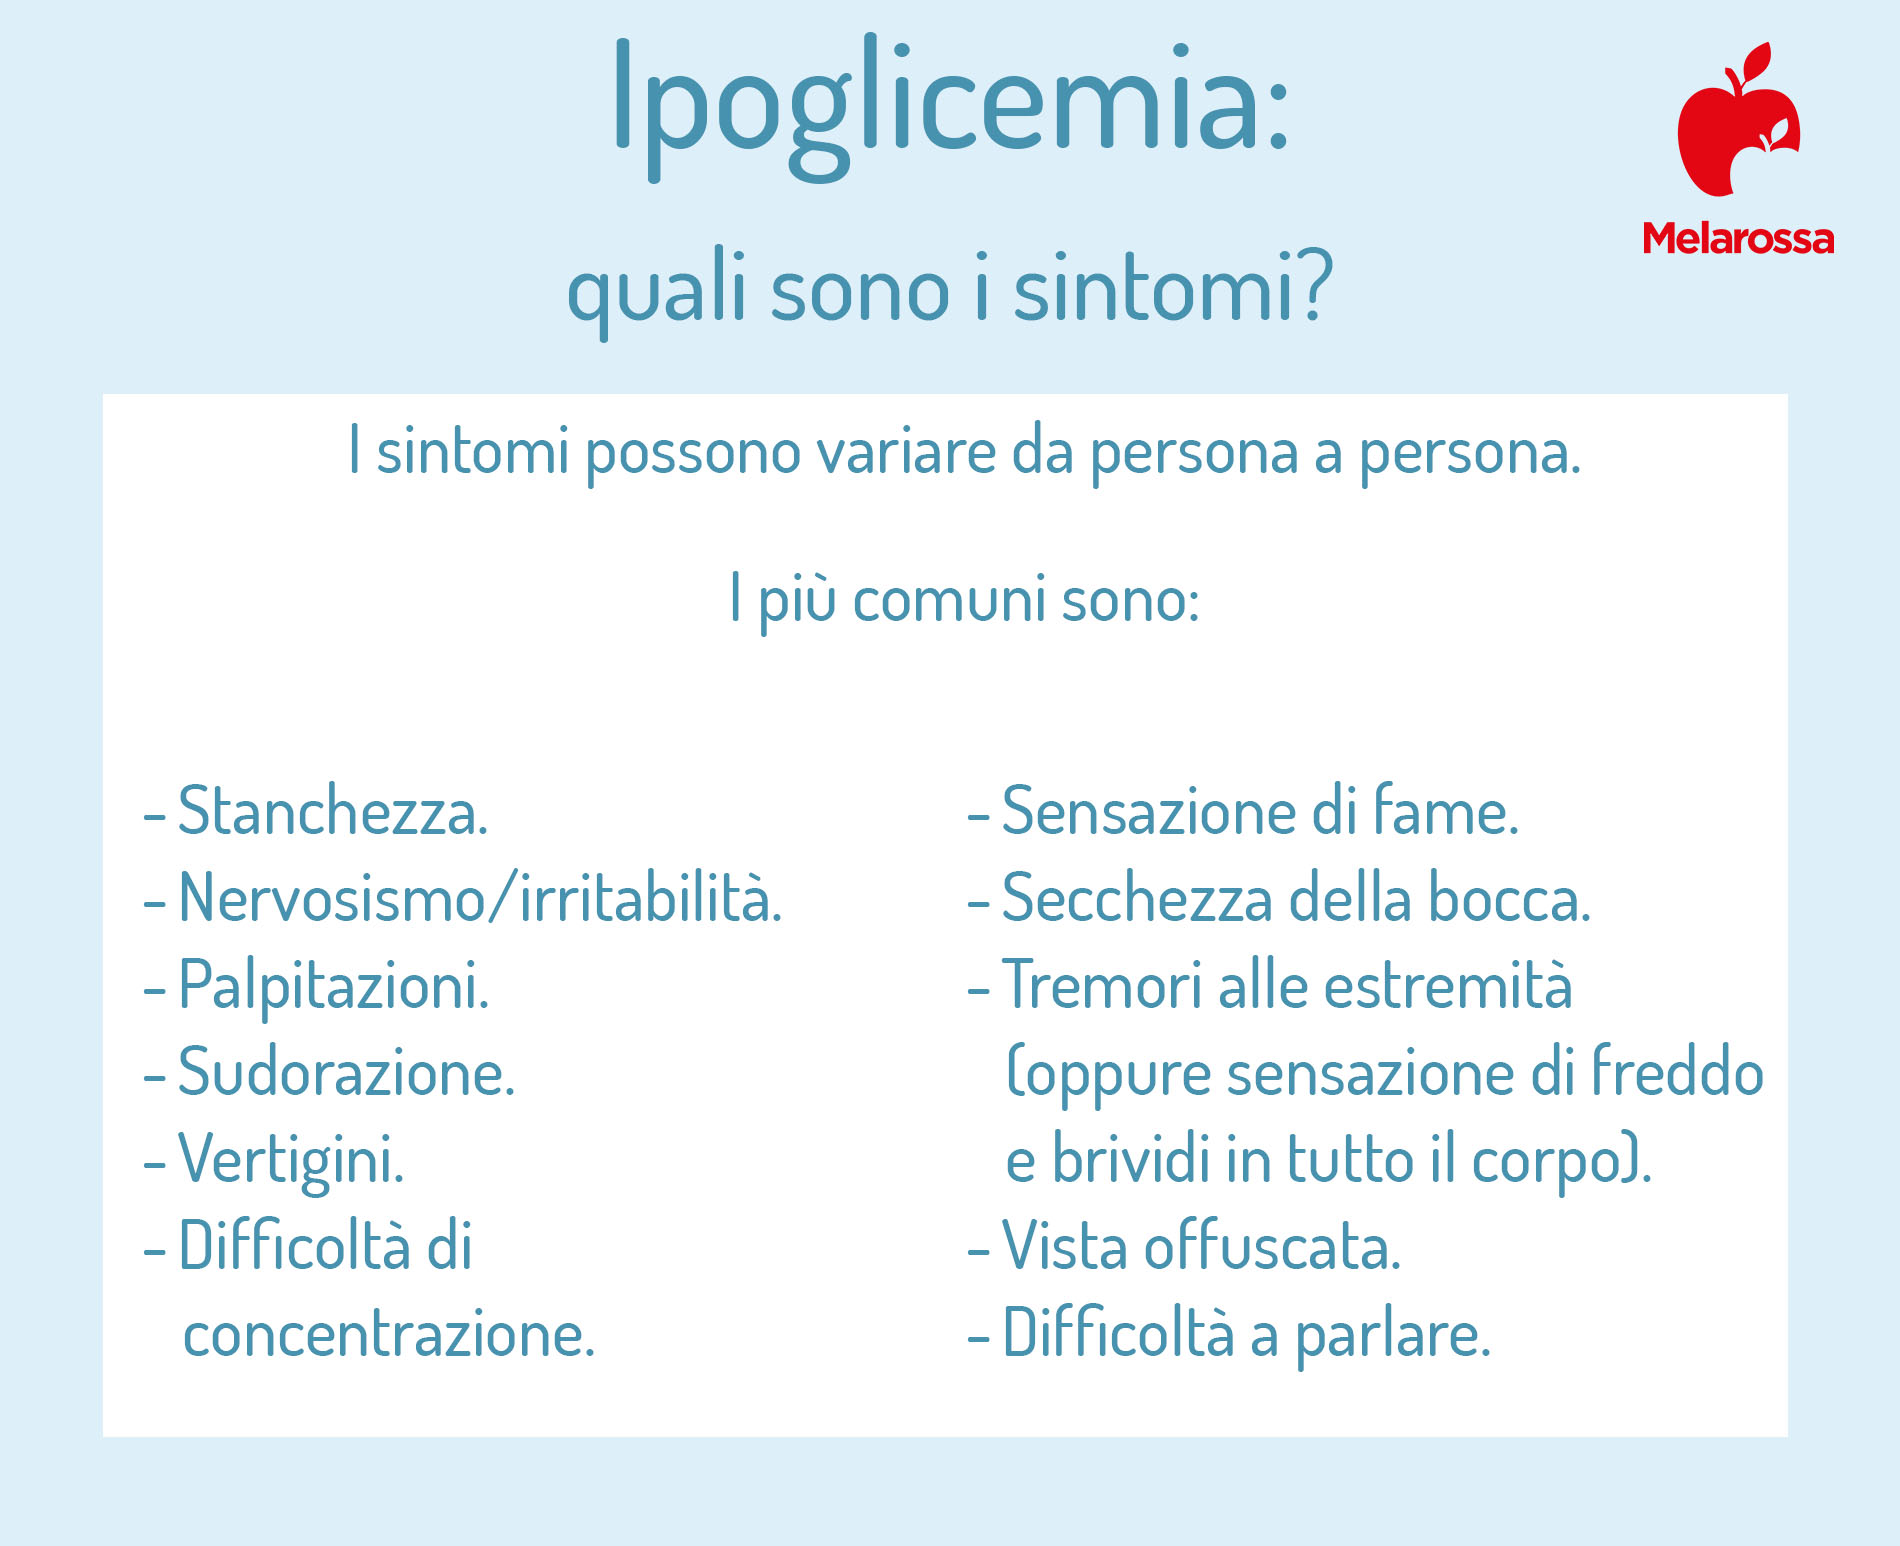 ipoglicemia: sintomi